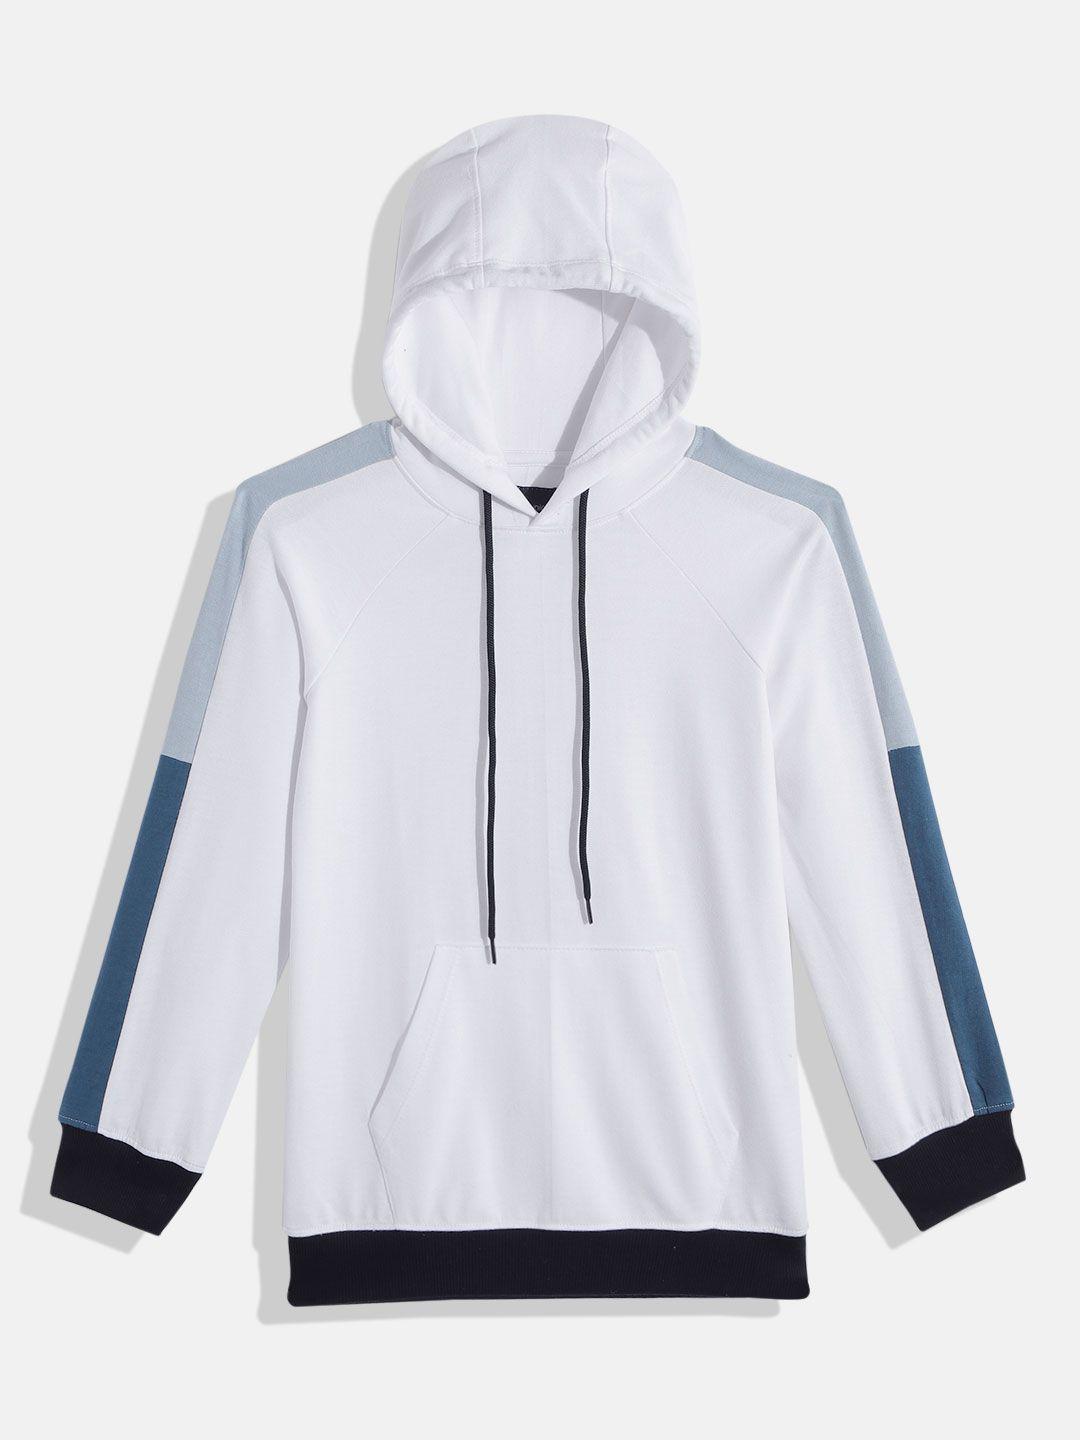 m&h juniors boys white & blue solid hooded sweatshirt